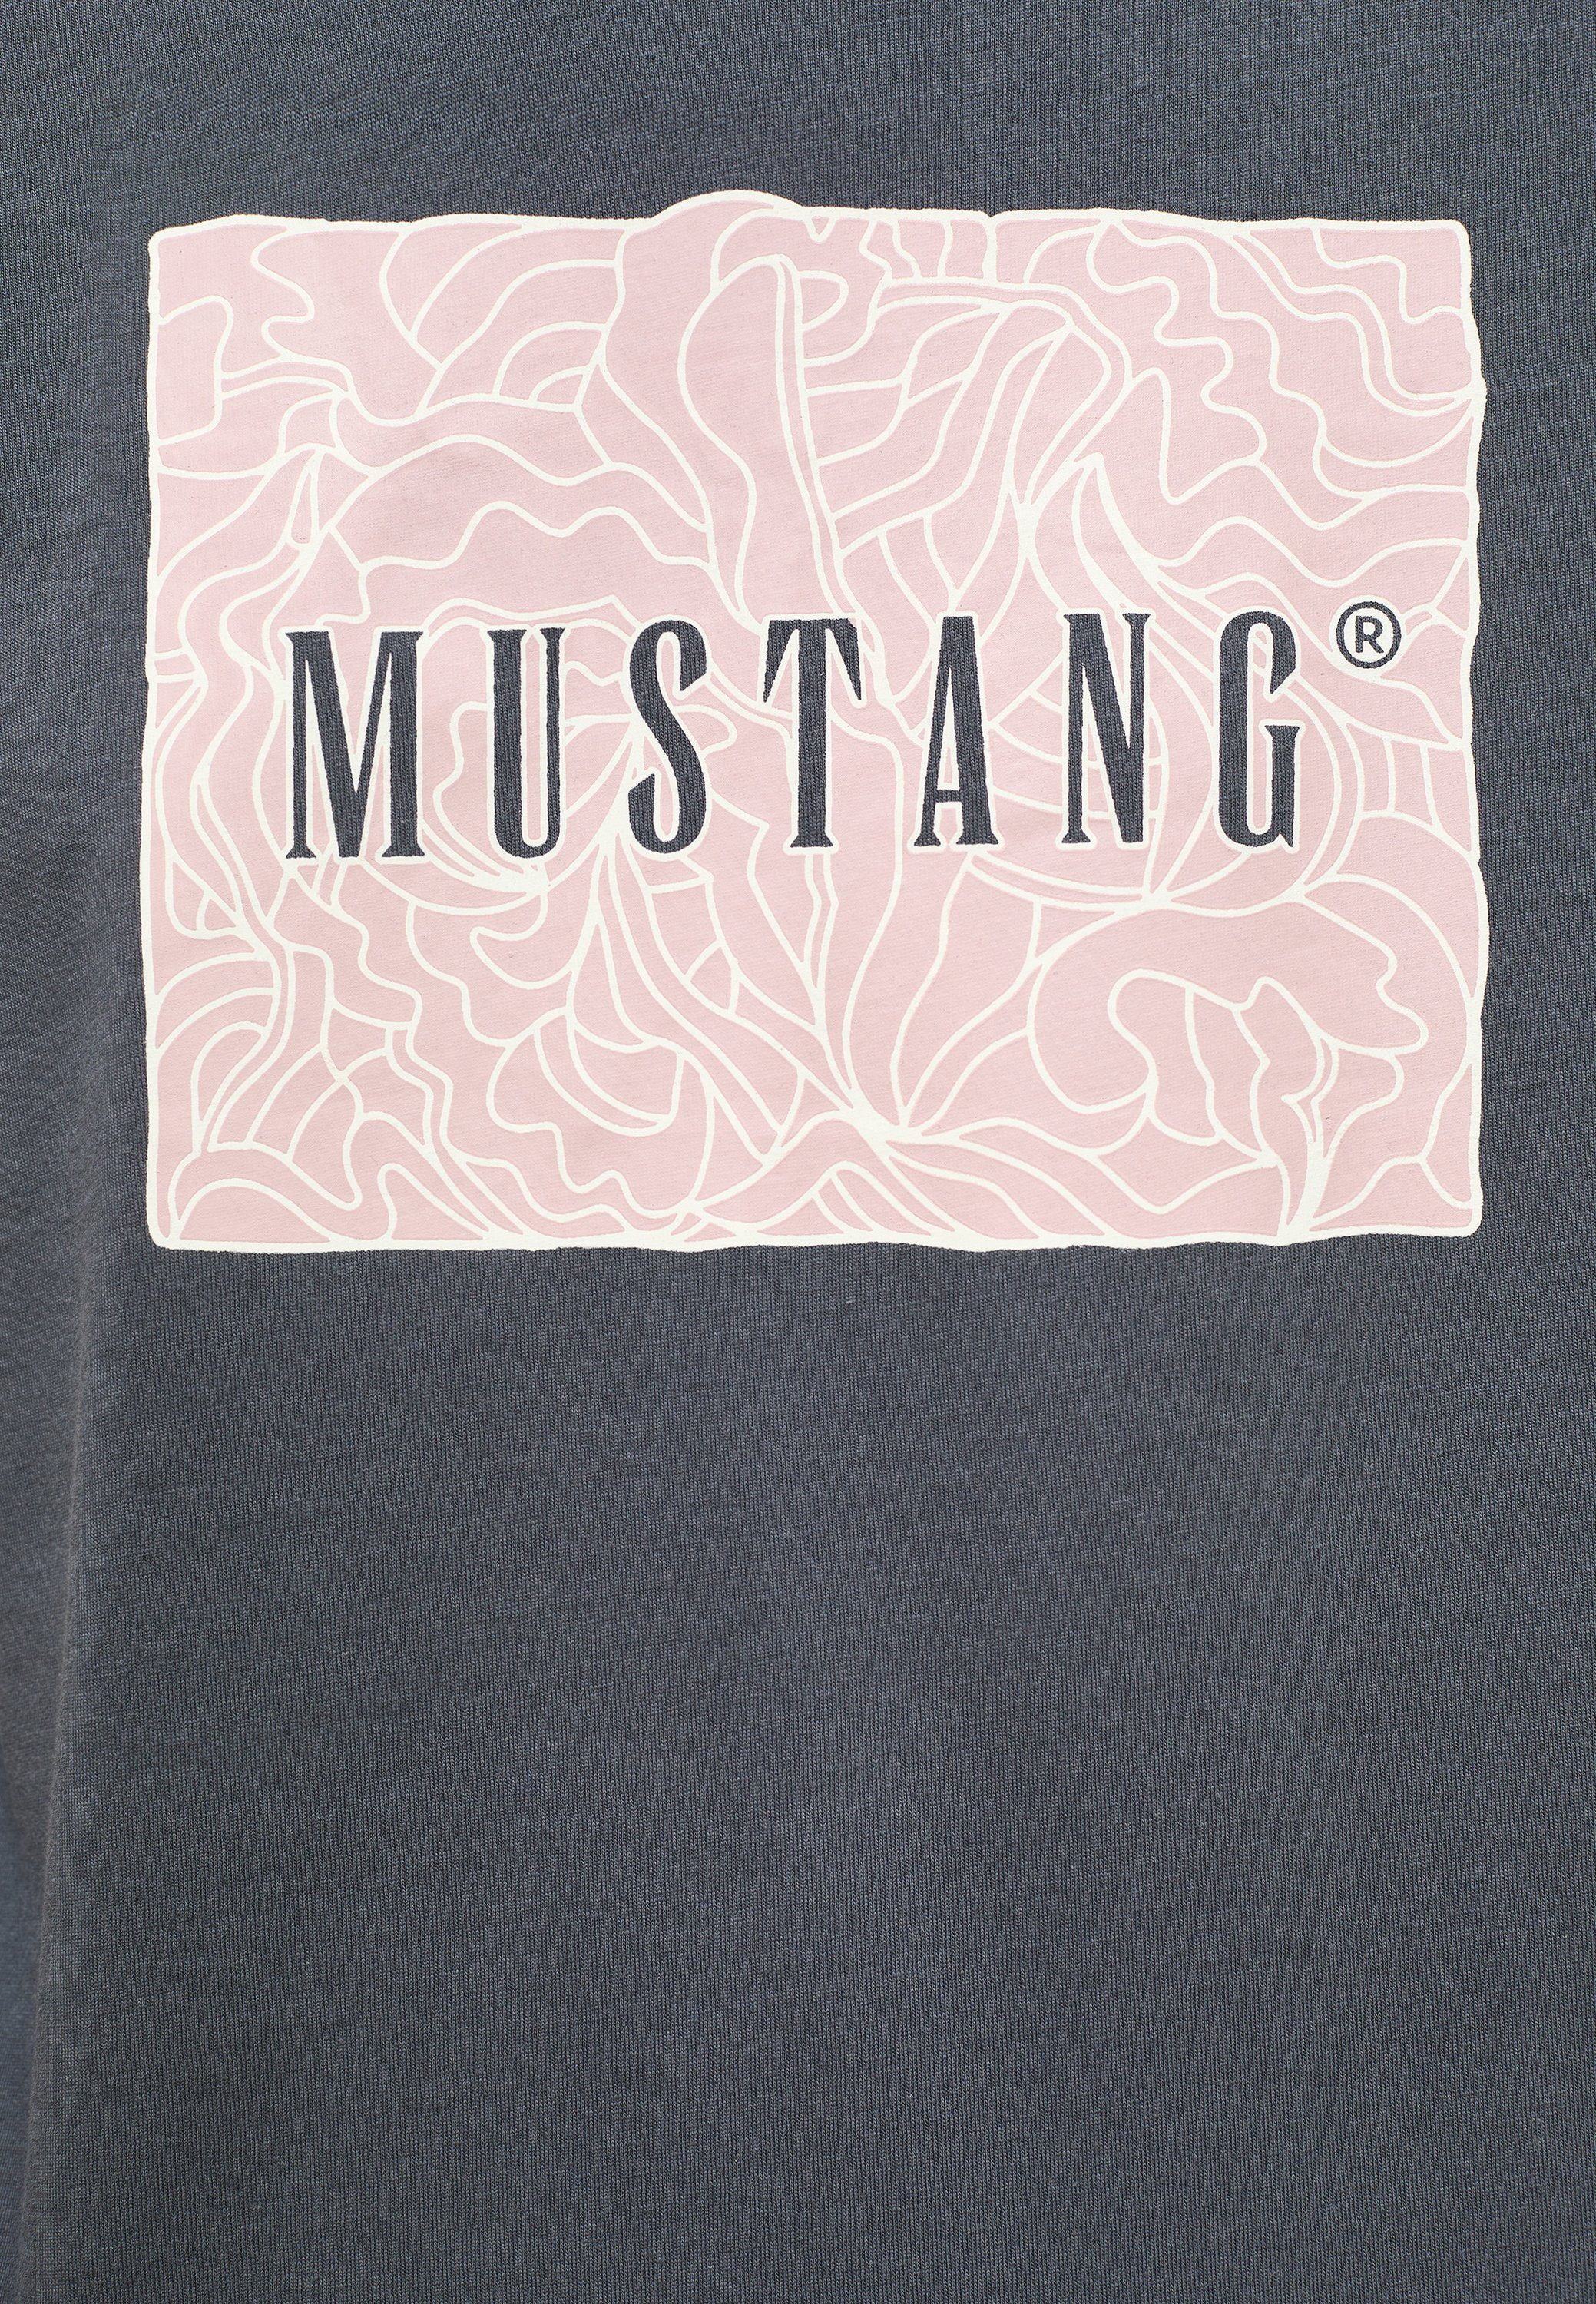 MUSTANG dunkelgrau Print-Shirt T-Shirt Kurzarmshirt Mustang